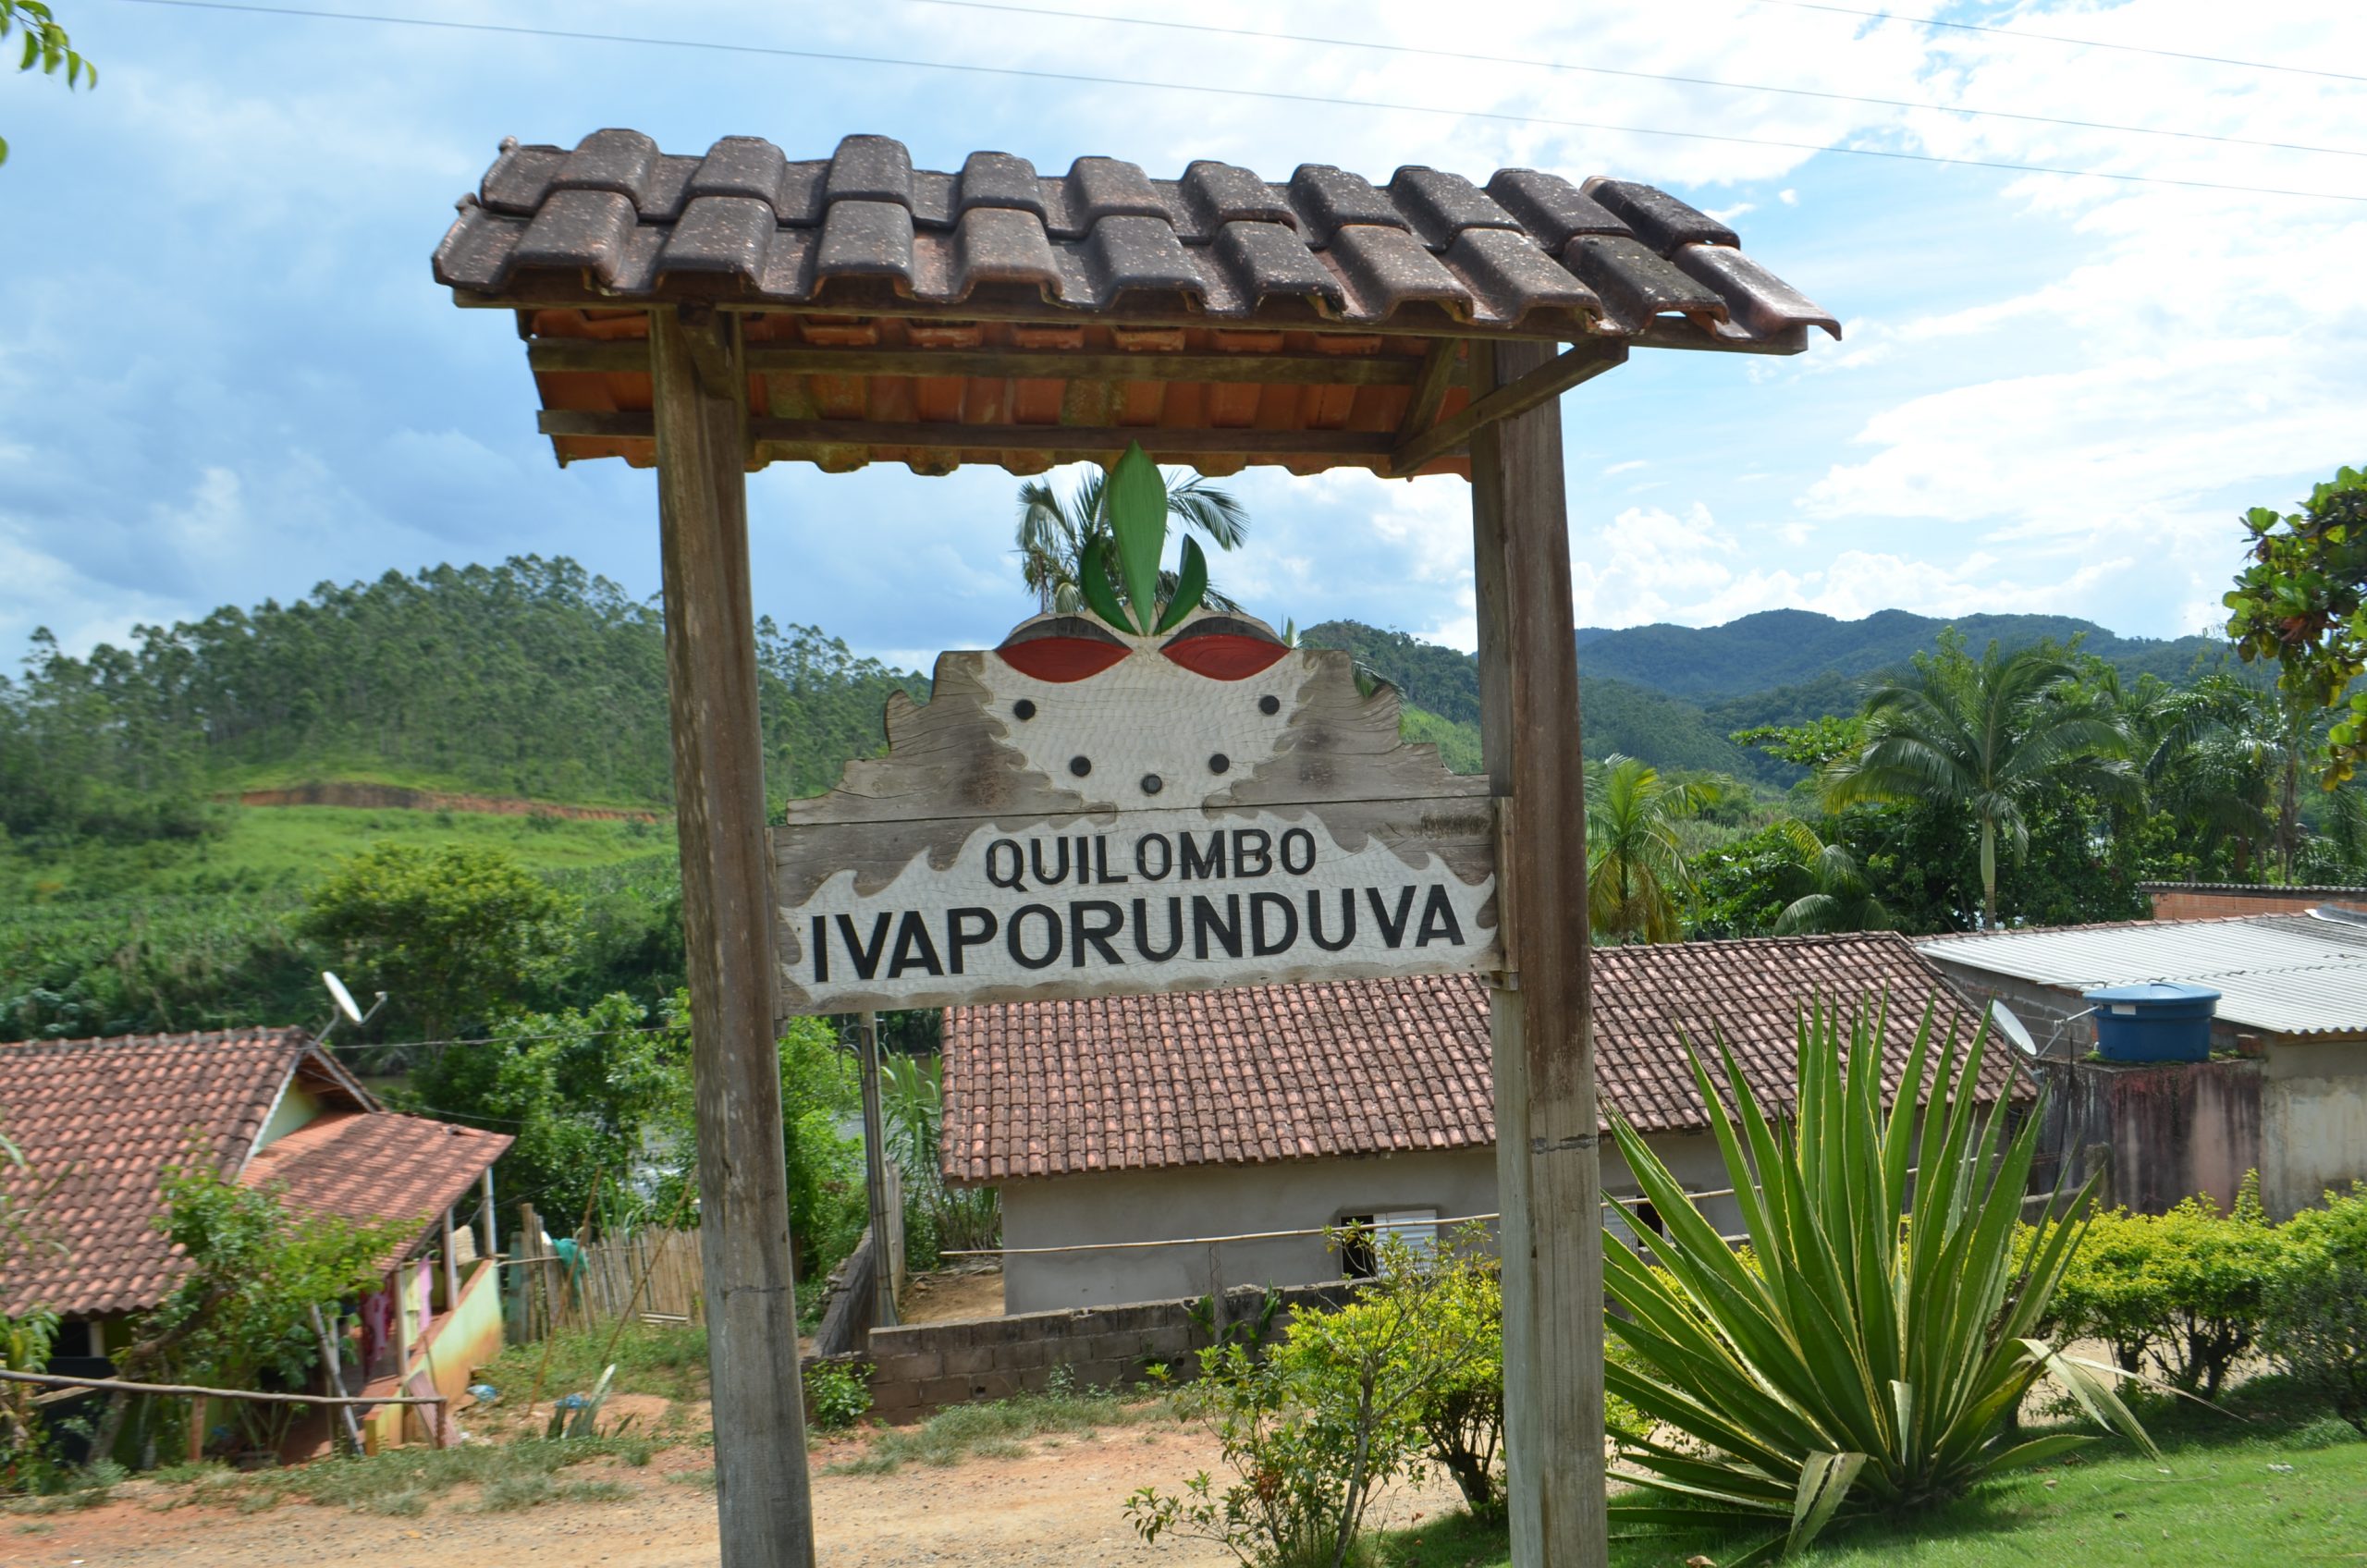 Quilombo ivaporanduva